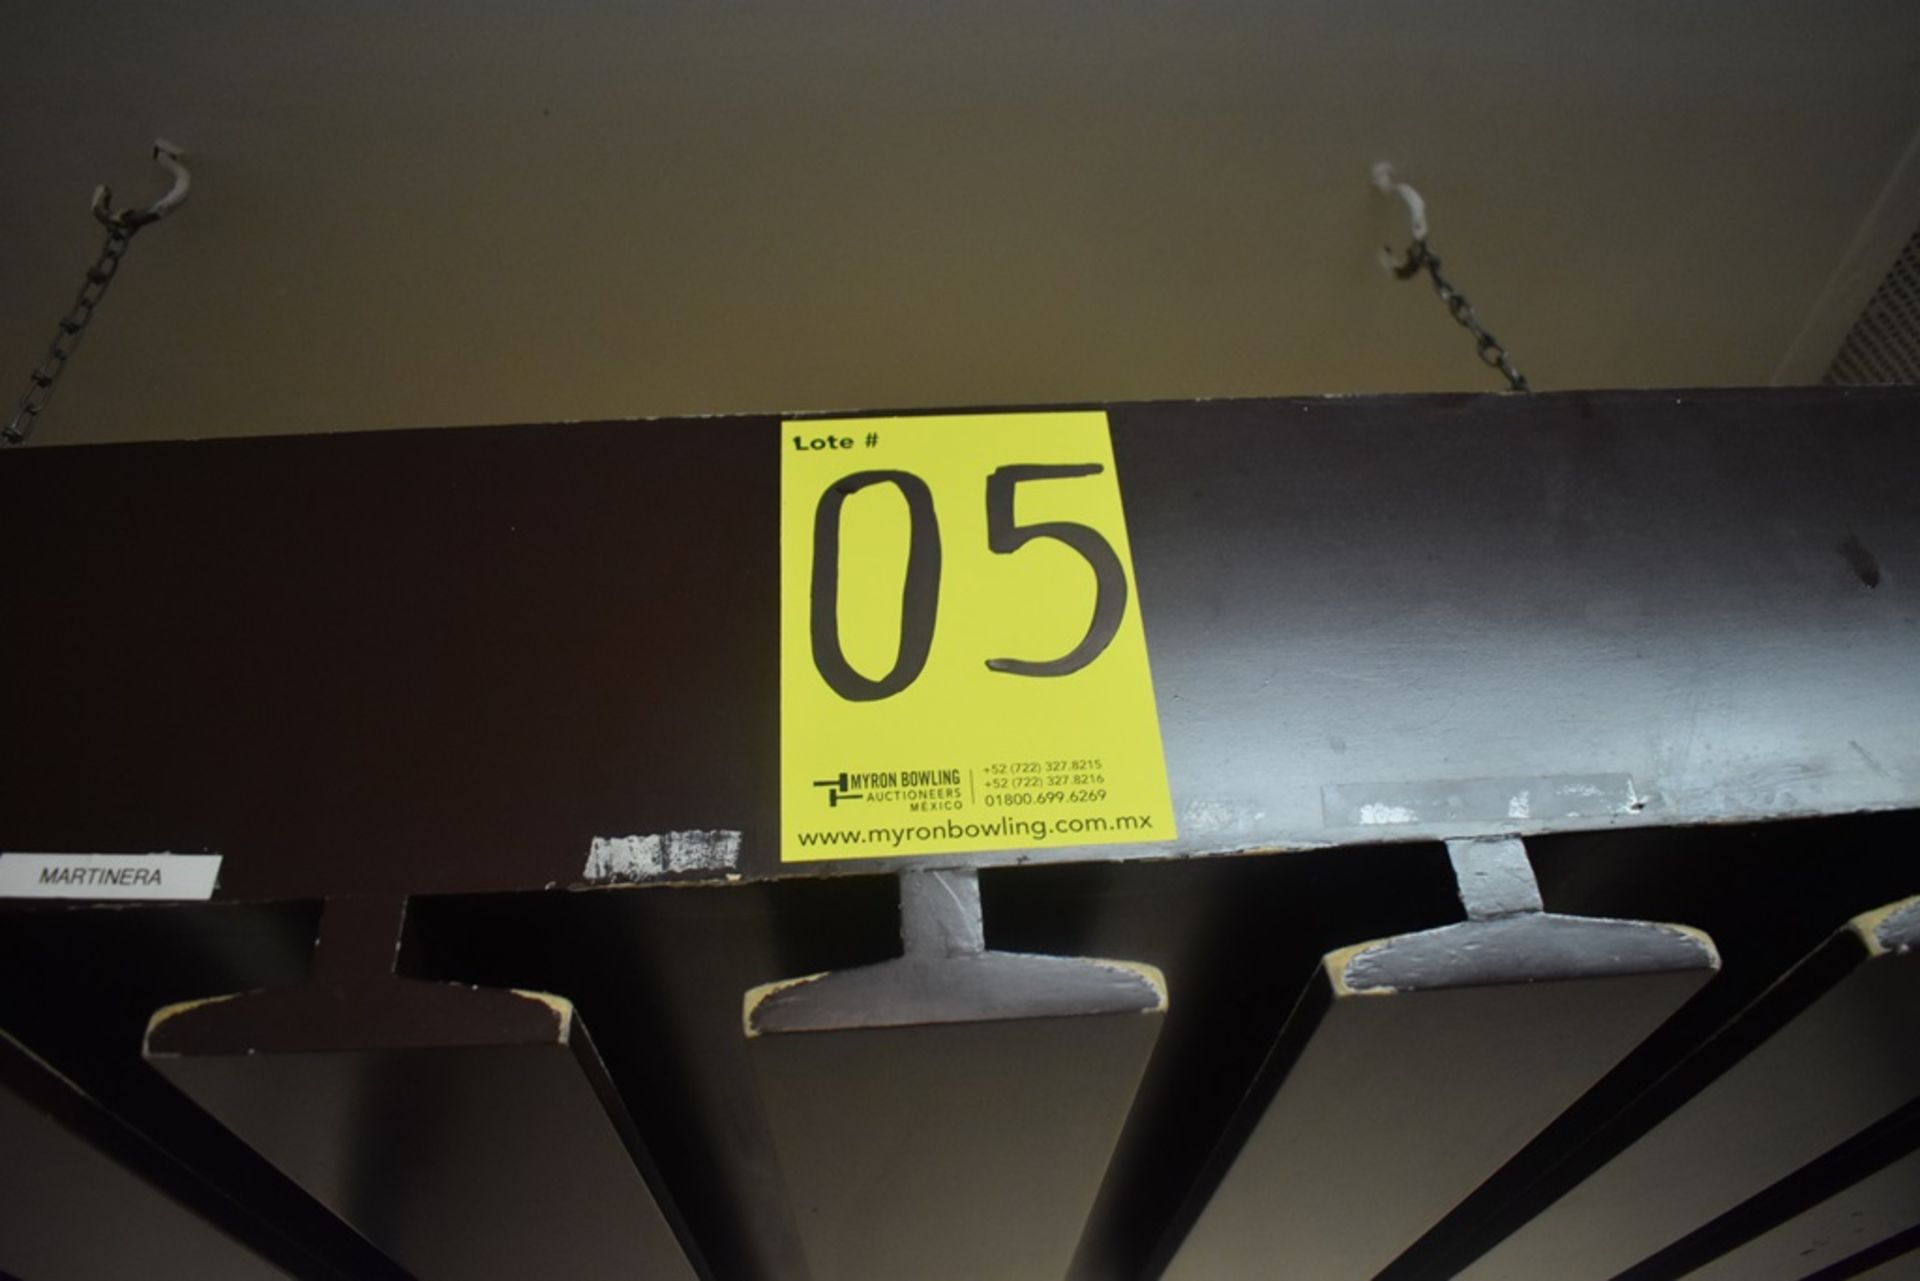 Tarja en L de 4 tinas en acero inoxidable medidas 1.85 x 0.52 x 0.78 m ; 2 Repisas de madera en L m - Image 29 of 29